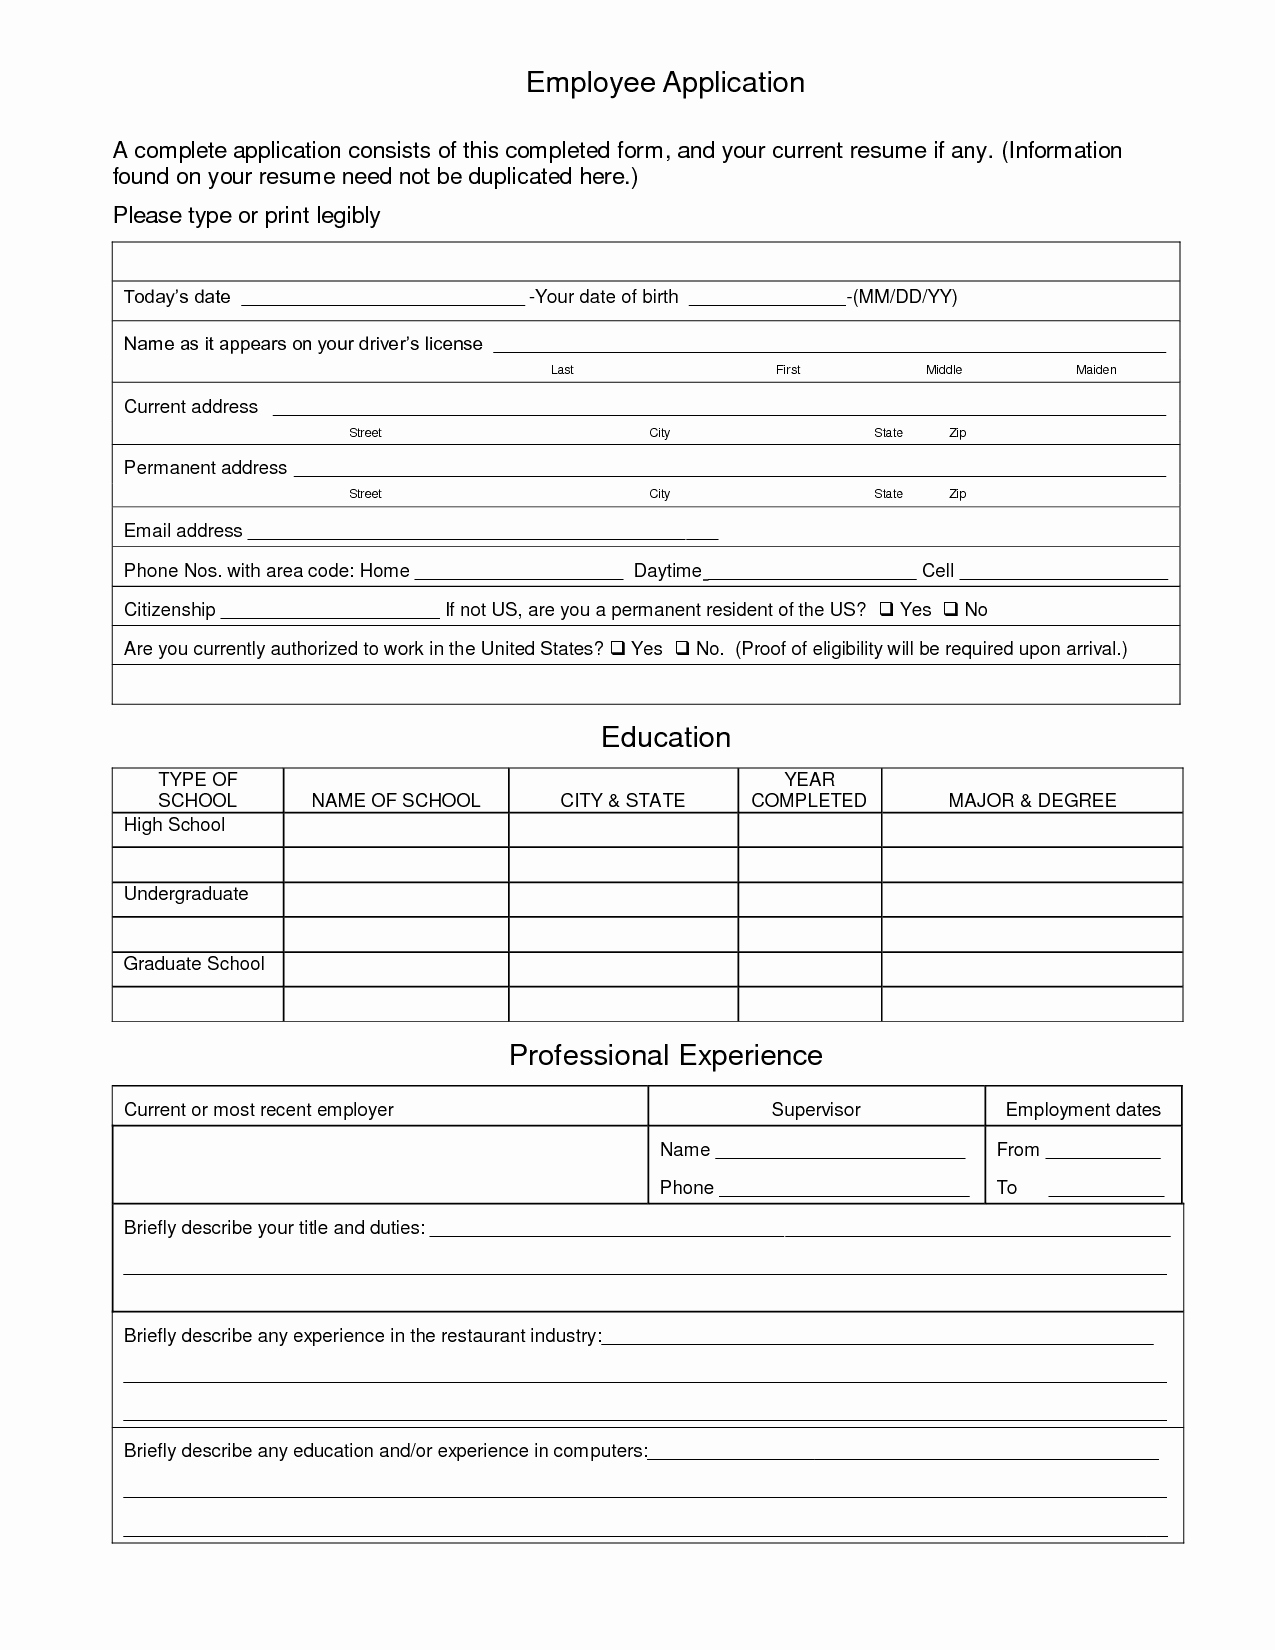 Employment Application form Doc New Sample Employment Application Restaurant by Goq